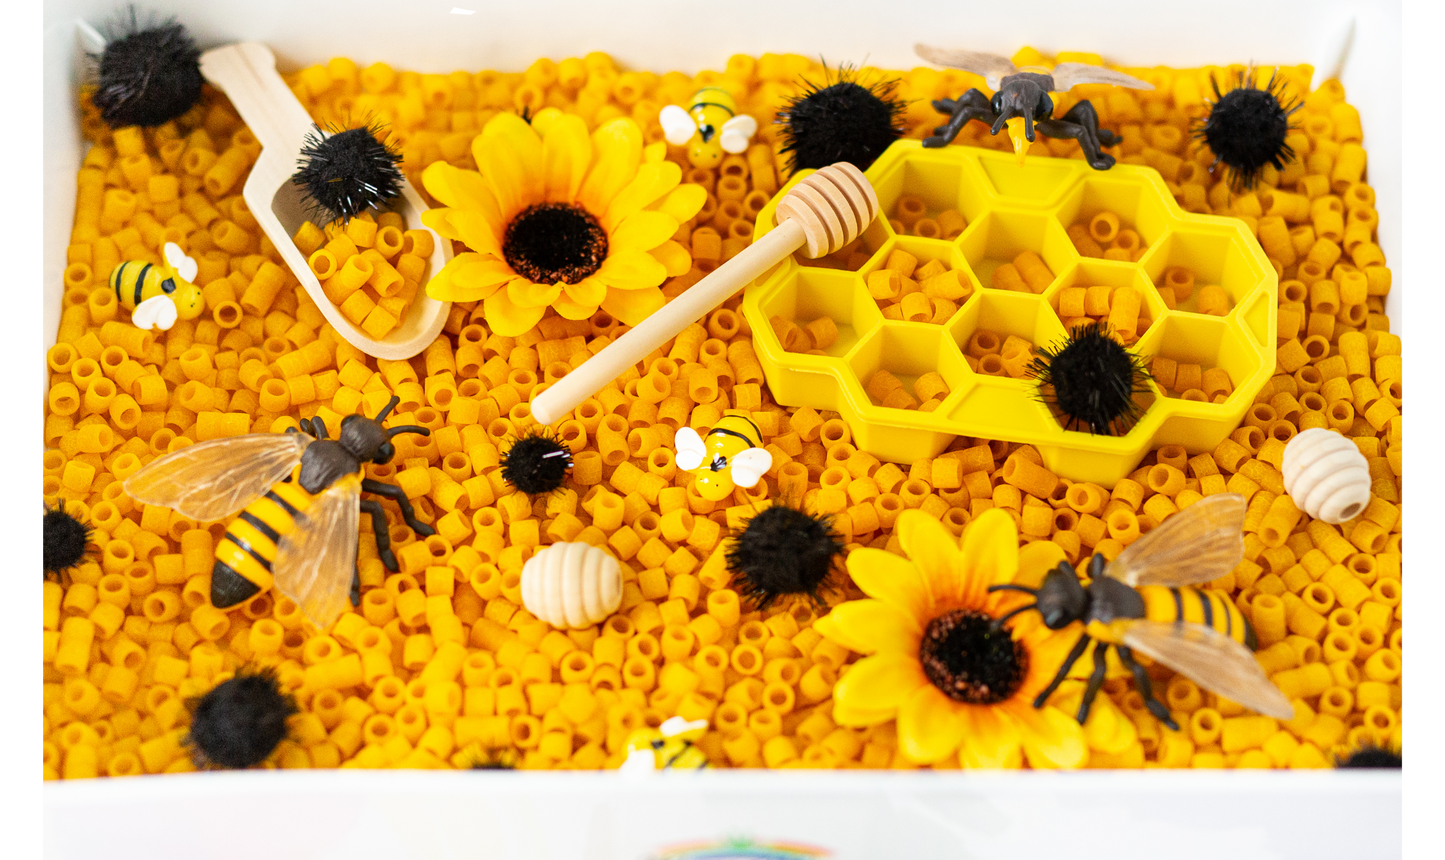 Summer Bees - Baby Sensory Nature Adventure in the Flower Garden with Happy  Honeybees & Friends 